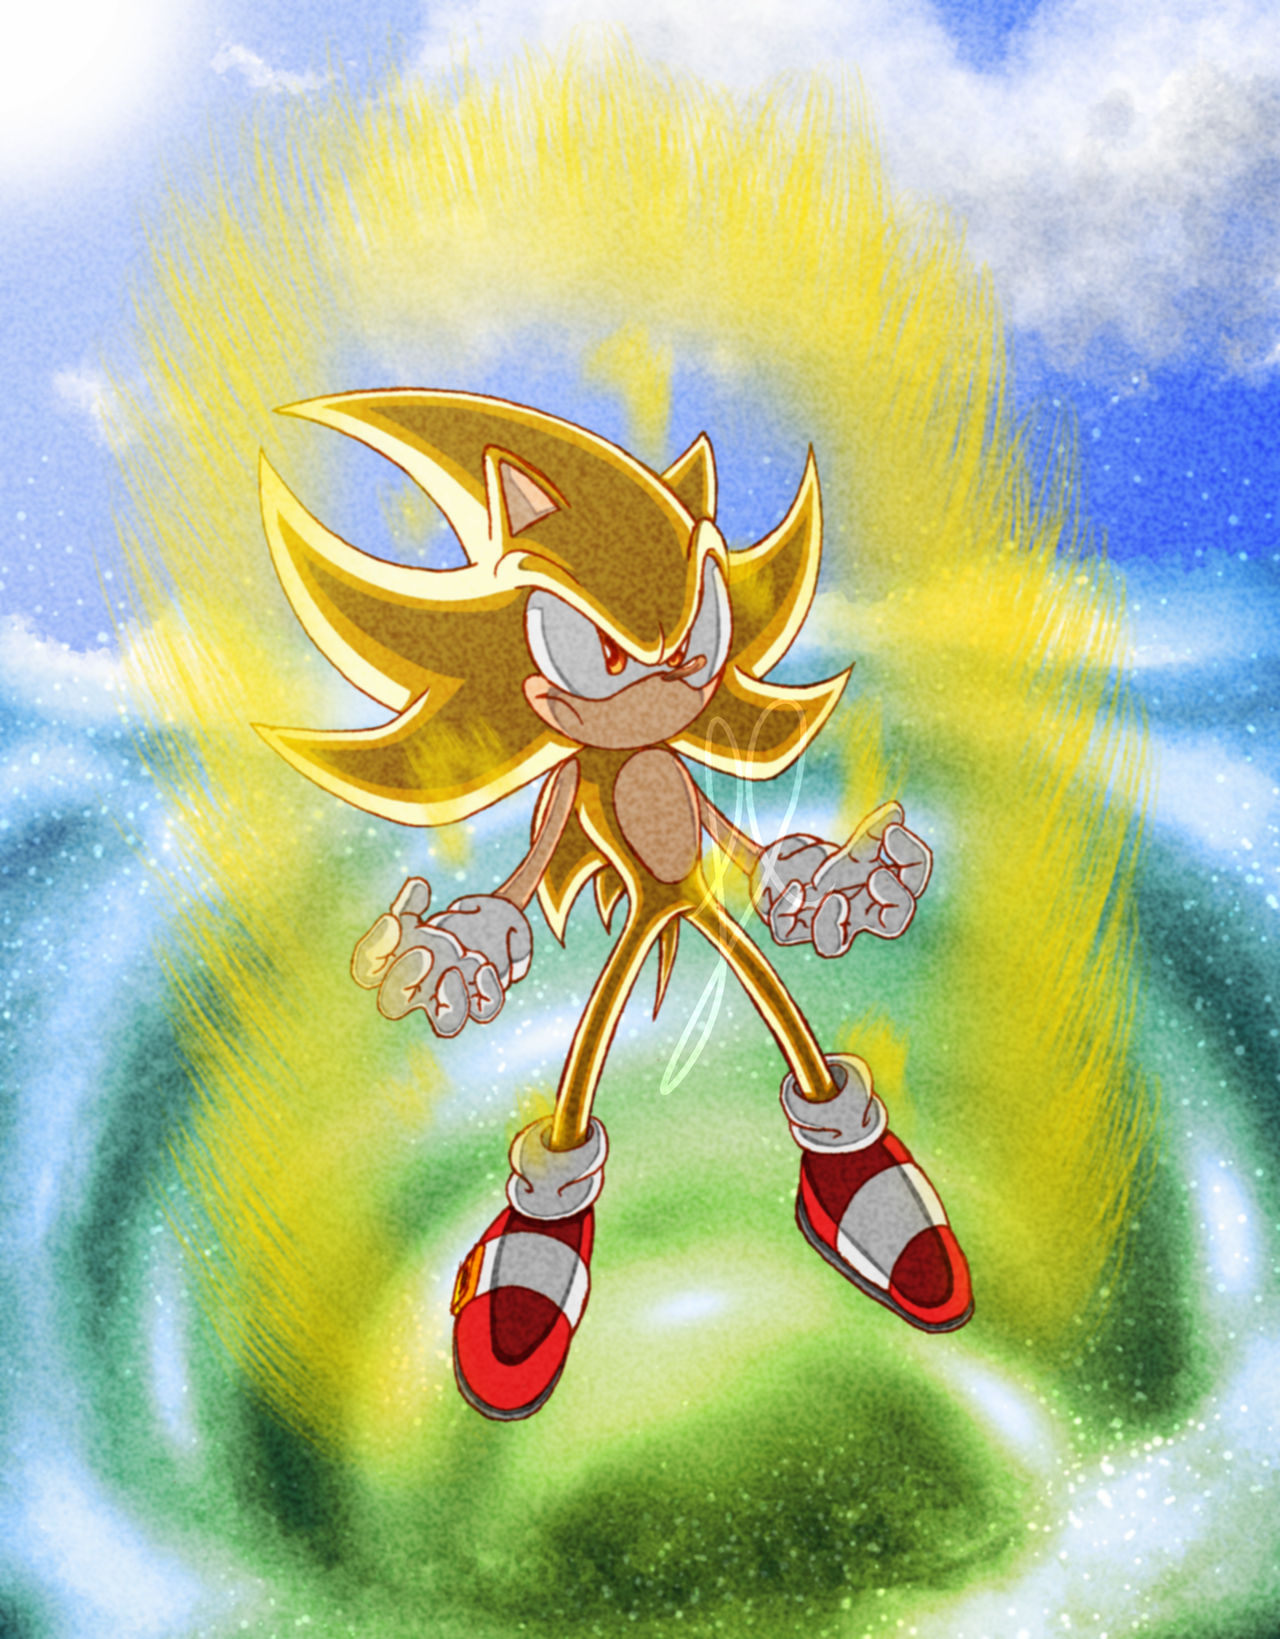 Super Sonic - Sonic Advance 2 Redraw by JLuisJoni on DeviantArt